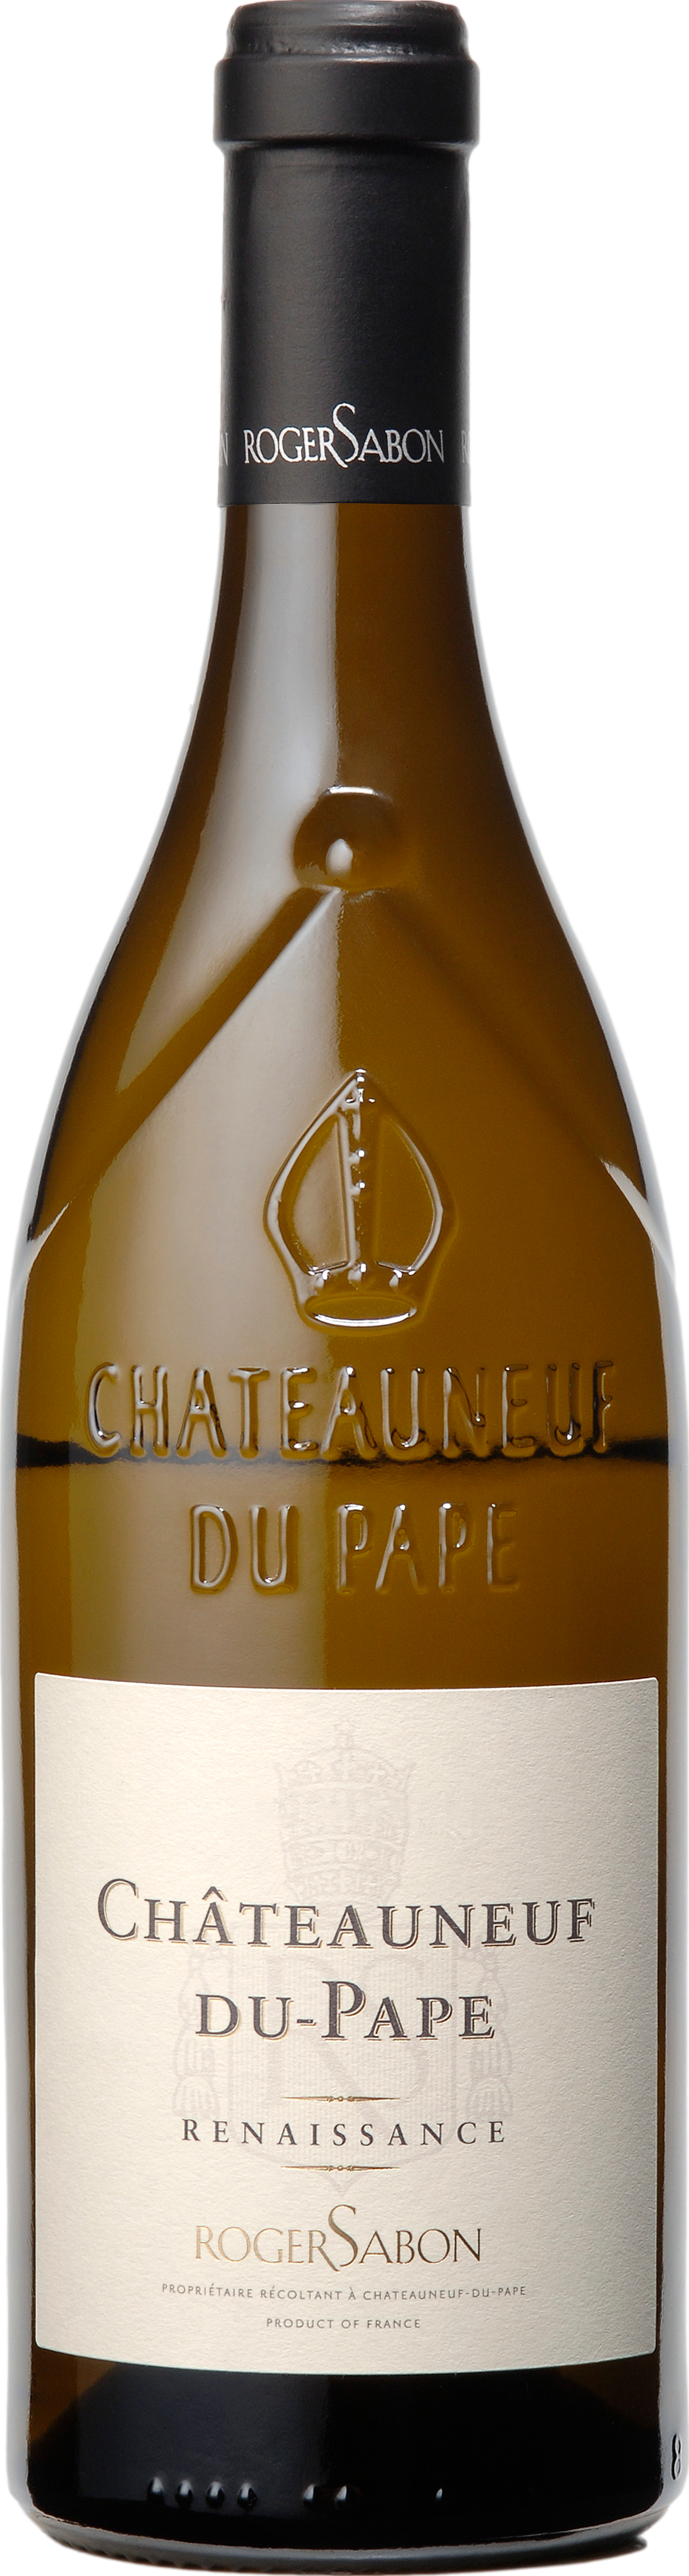 NEU 20 günstig Kaufen-Roger Sabon Chateauneuf du Pape Renaissance Blanc 2021. Roger Sabon Chateauneuf du Pape Renaissance Blanc 2021 . 